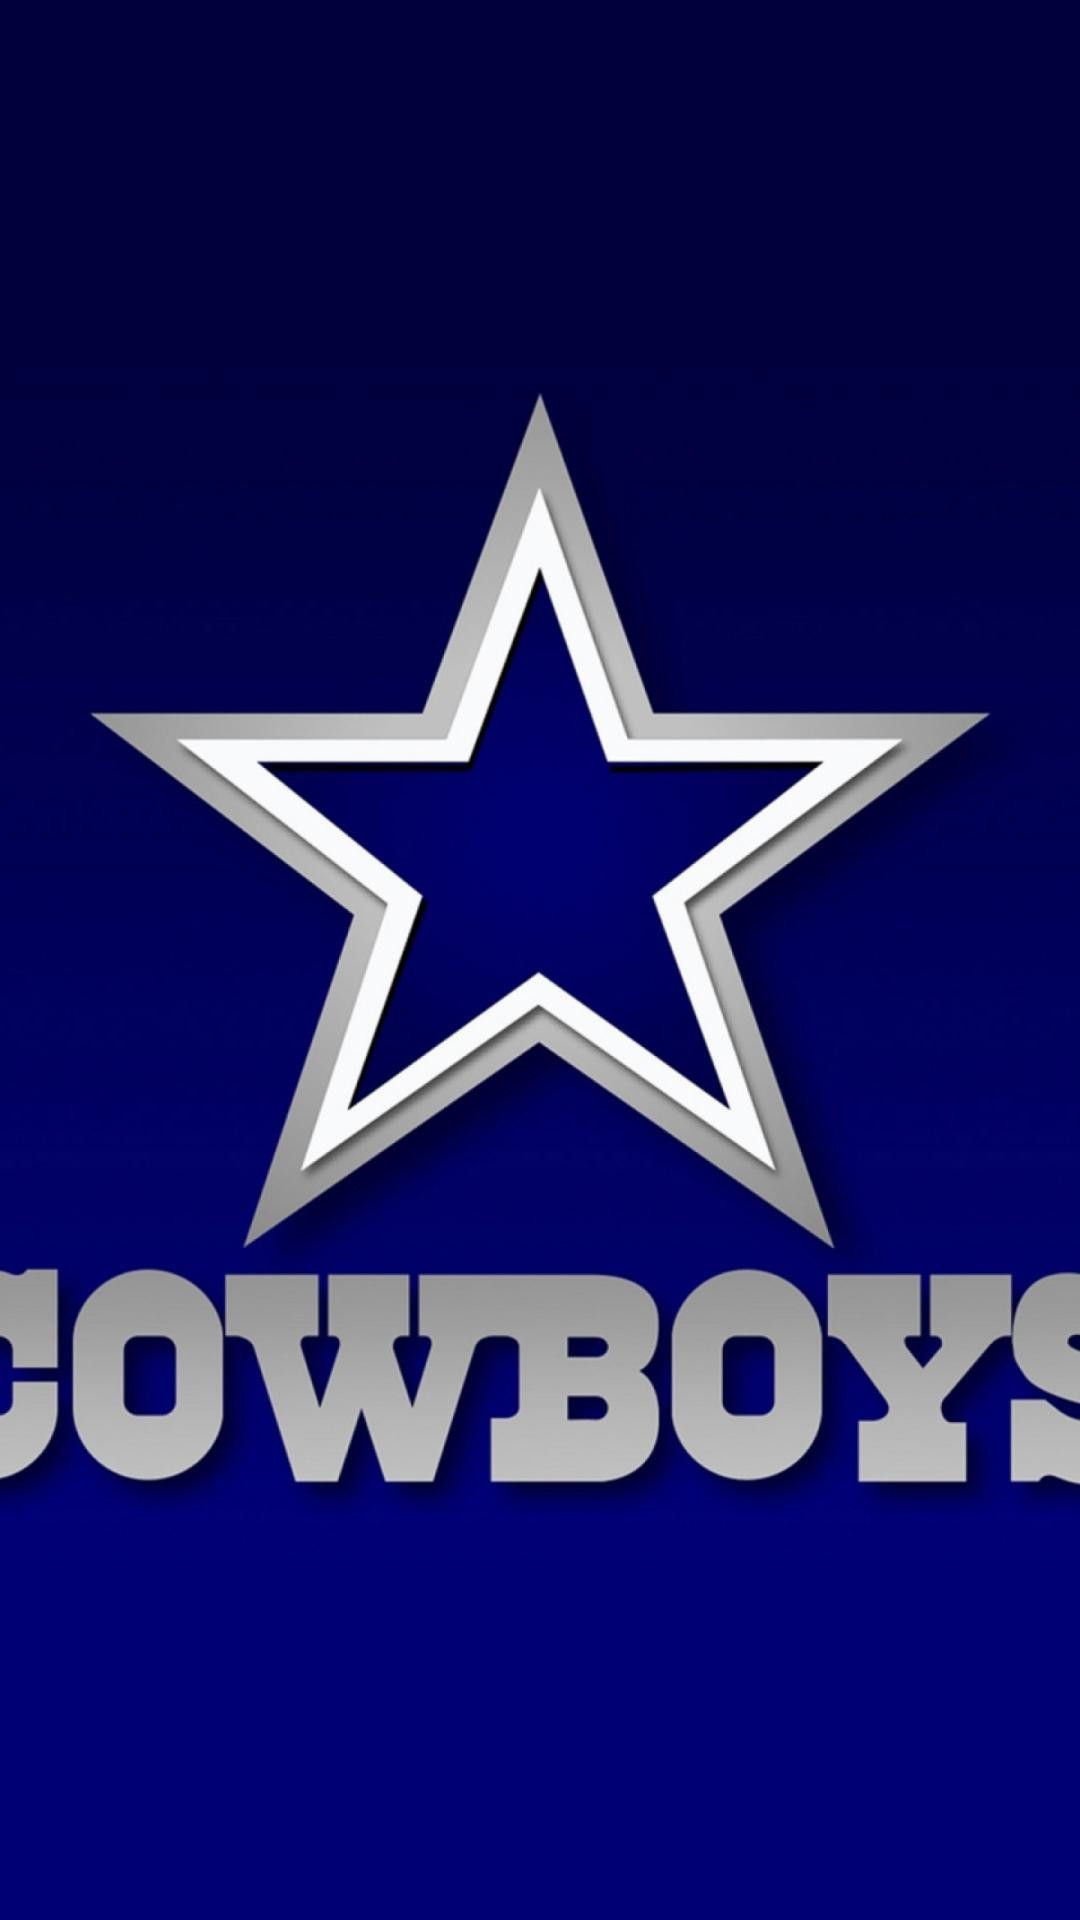 Wallpaper.wiki Blue Star Dallas Cowboys Iphone Wallpaper